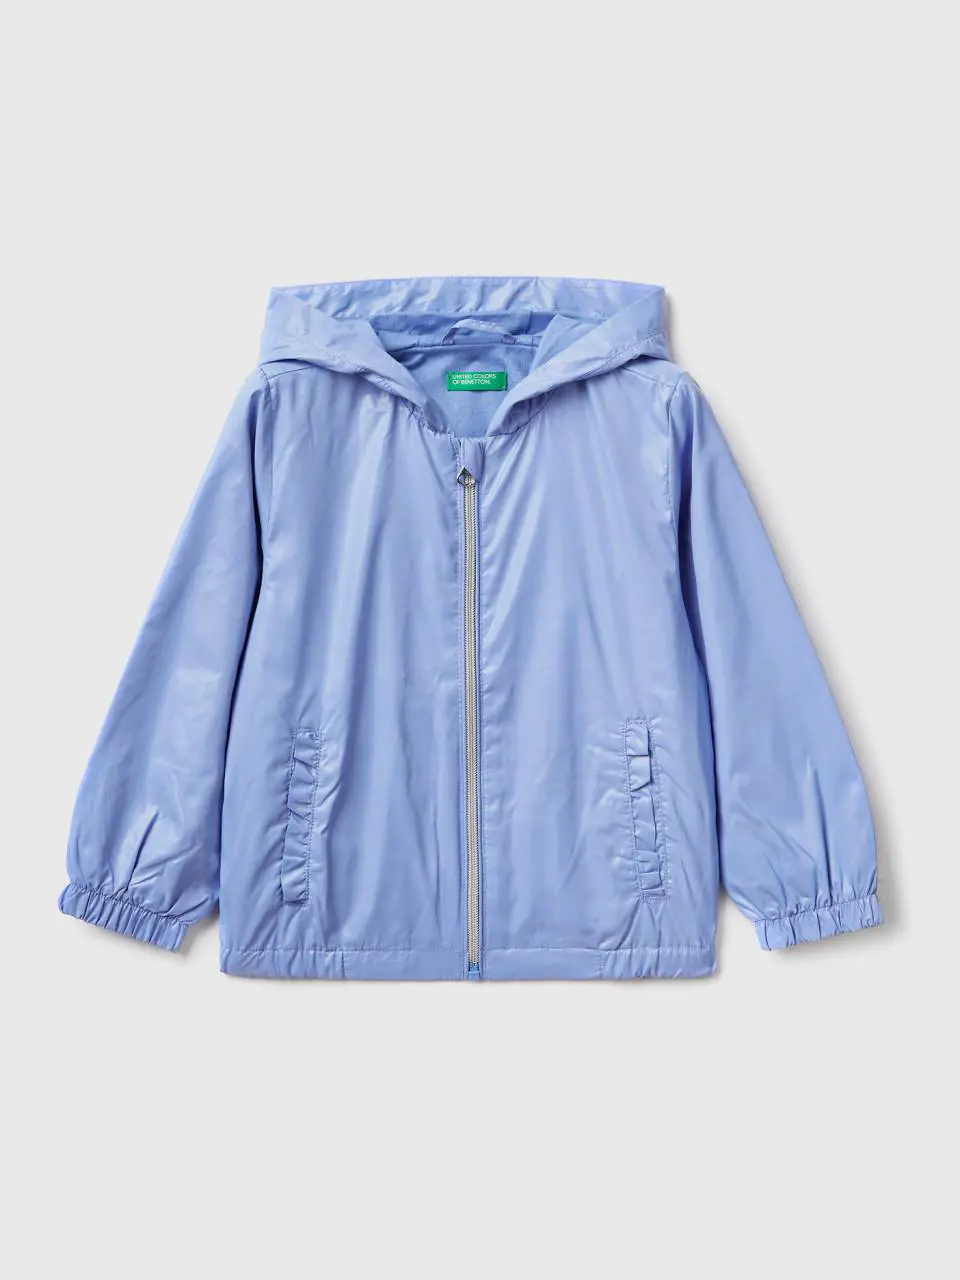 Benetton light "rain defender" jacket. 1